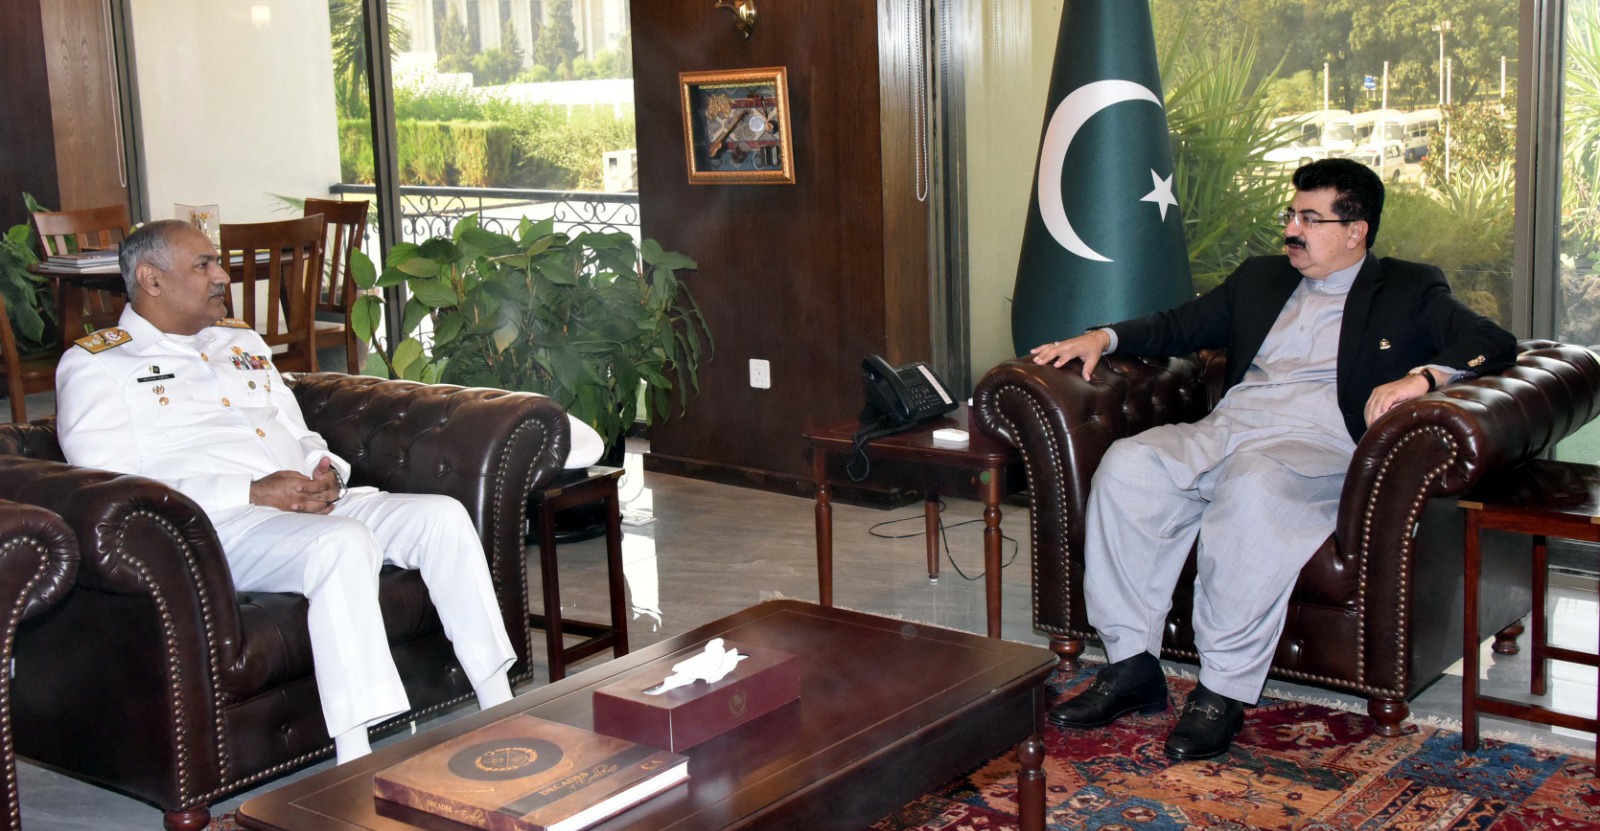 Meeting between Chairman Senate Muhammad Sadiq Sanjrani and Rear Admiral Javed Iqbal (HI) of the Pakistan Navy.